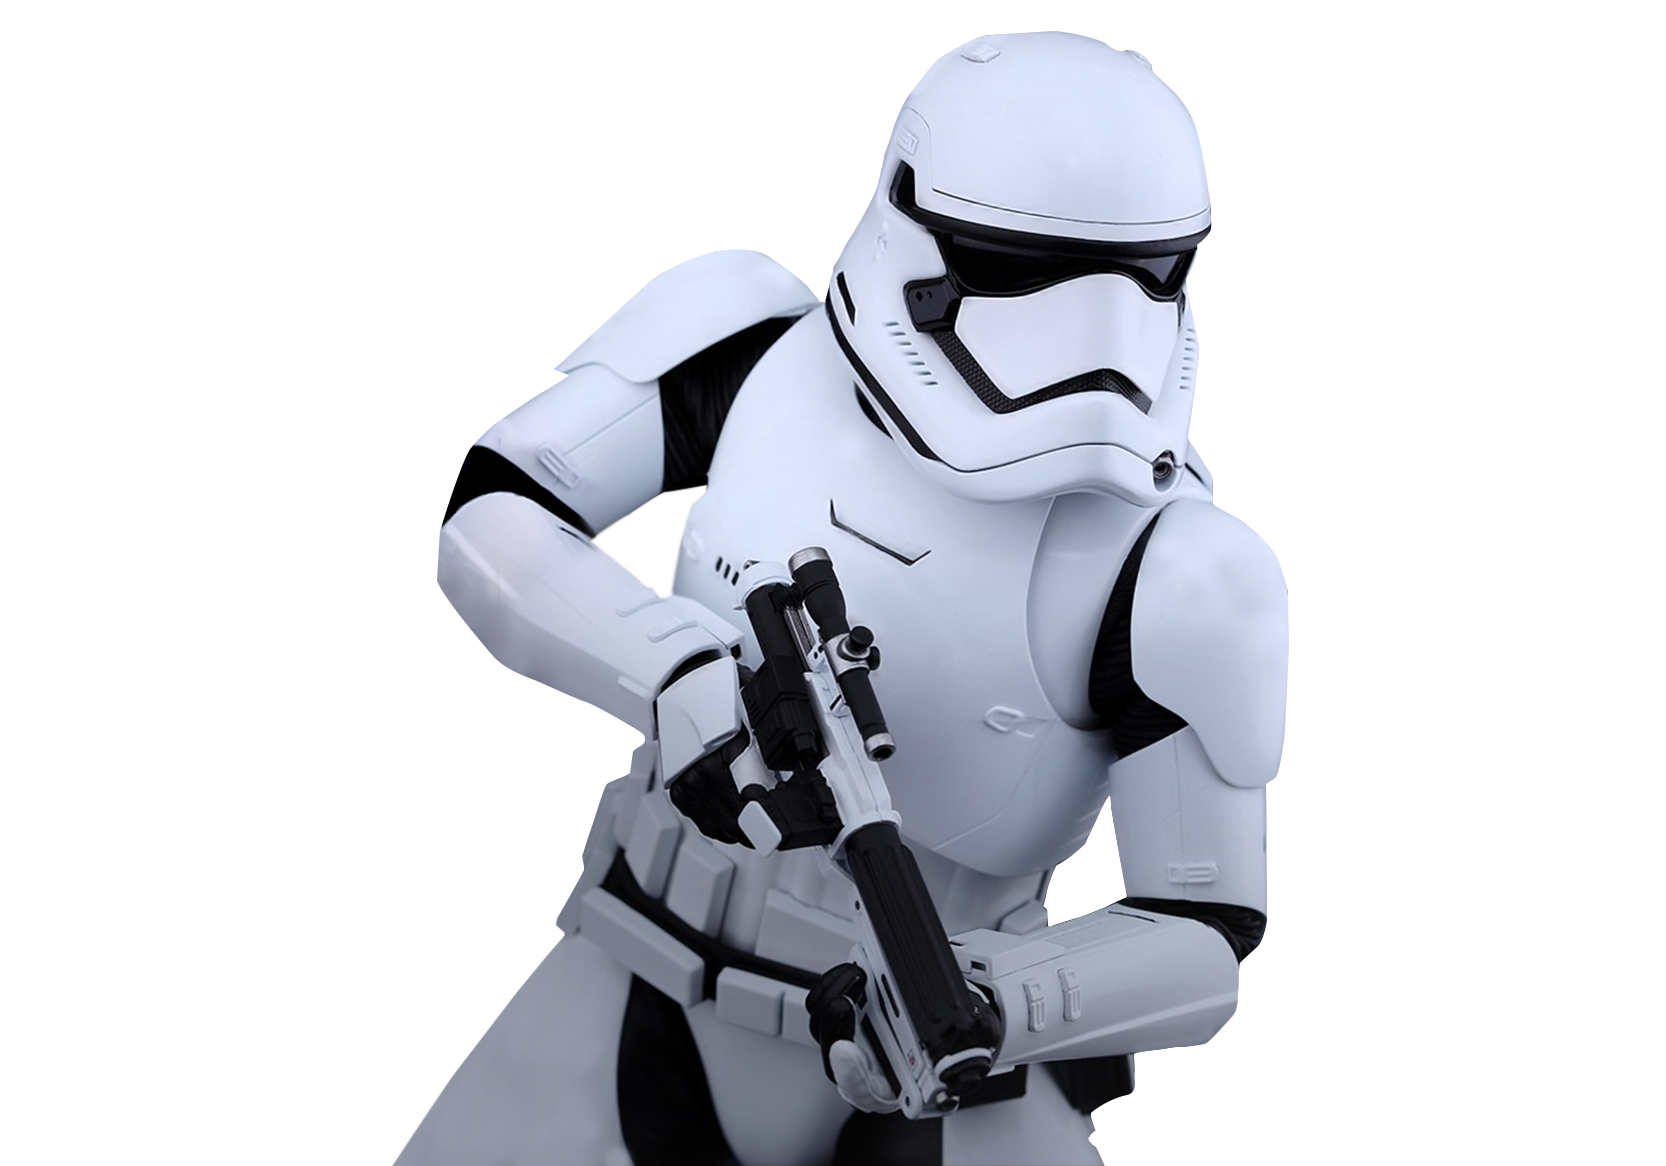 Stormtrooper PNG Image